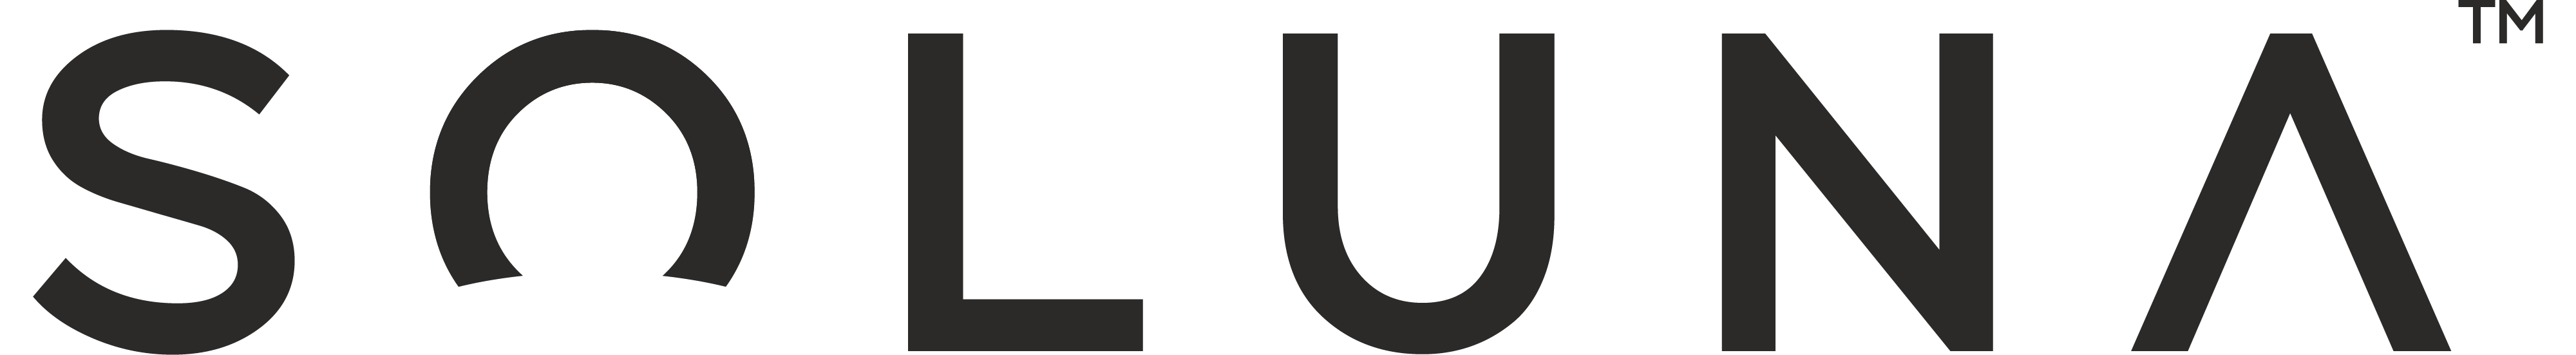 Soluna - logo Full black